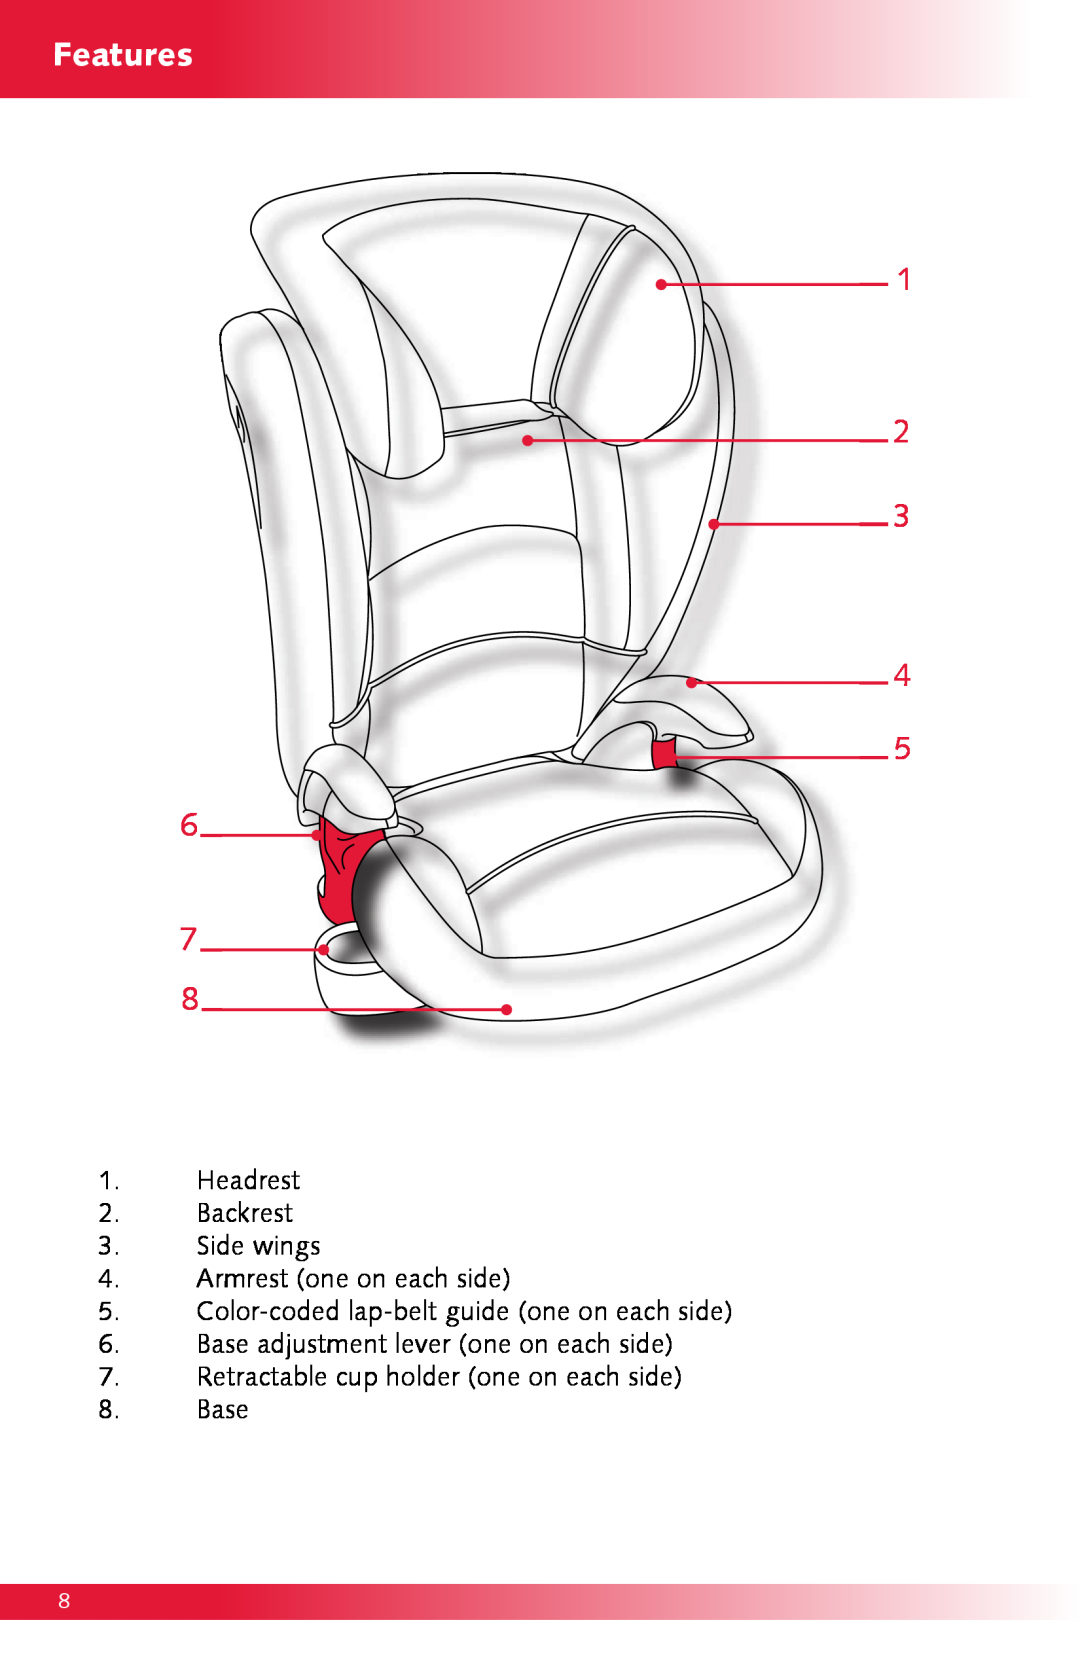 Britax Monarch manual Features, Headrest 2. Backrest 3. Side wings 4. Armrest one on each side 